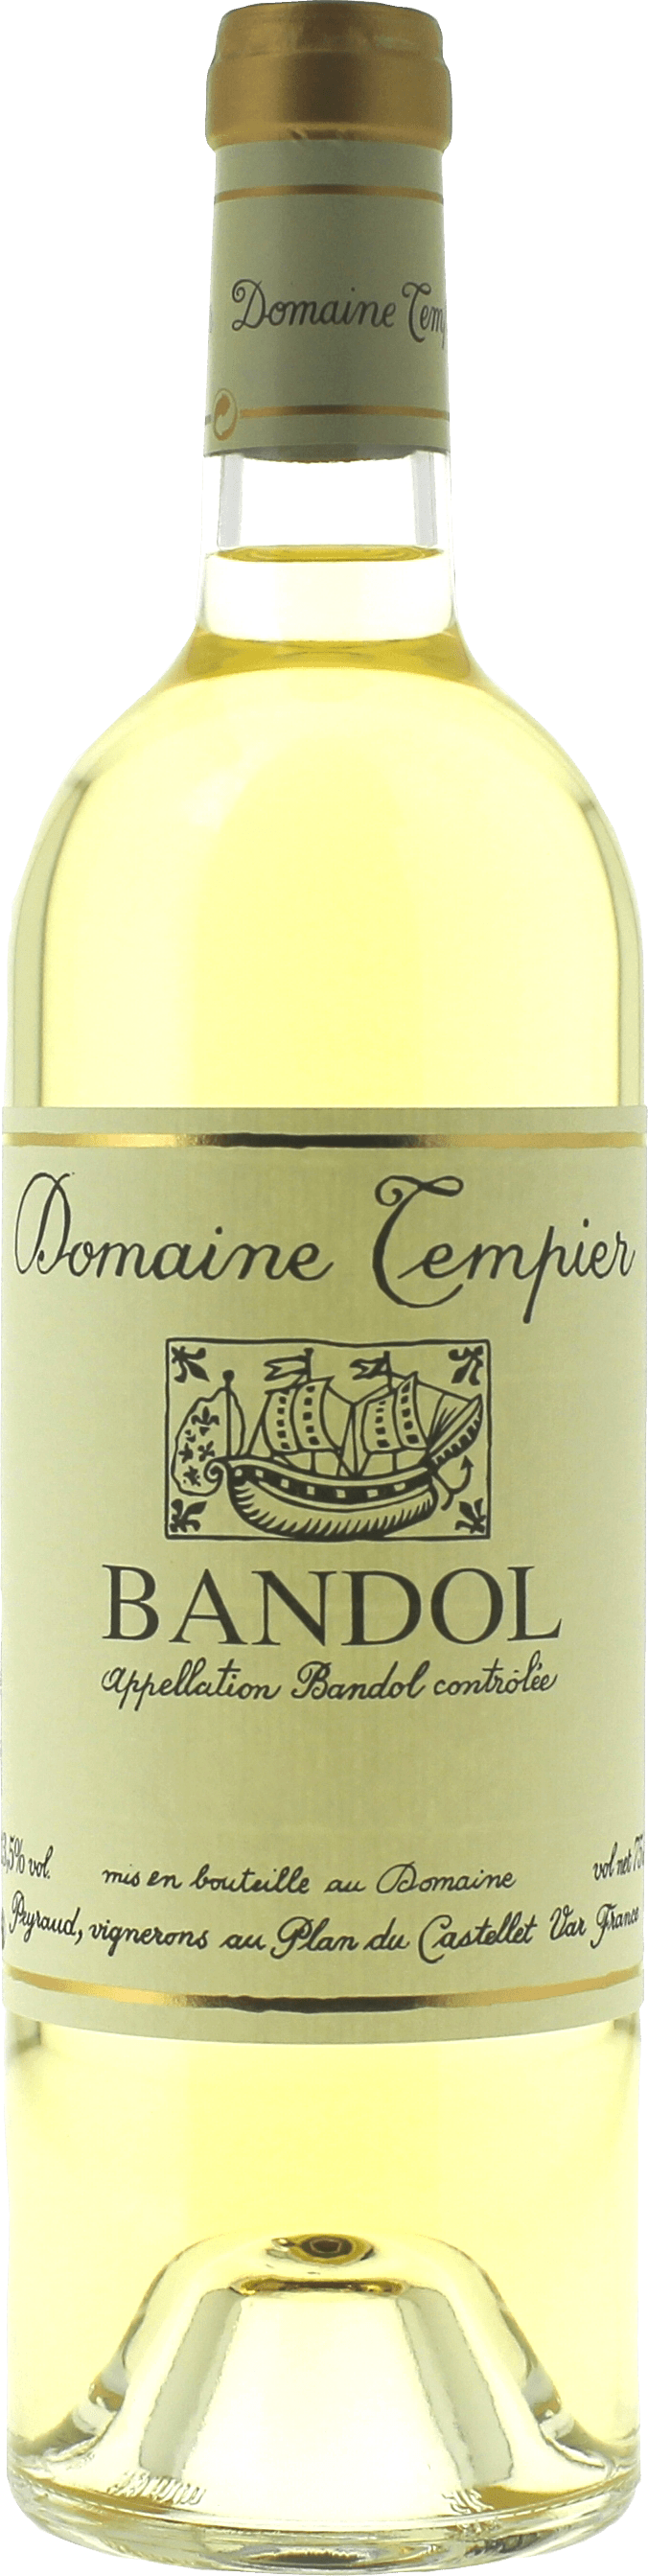 Bandol domaine tempier blanc 2019  Bandol, Provence